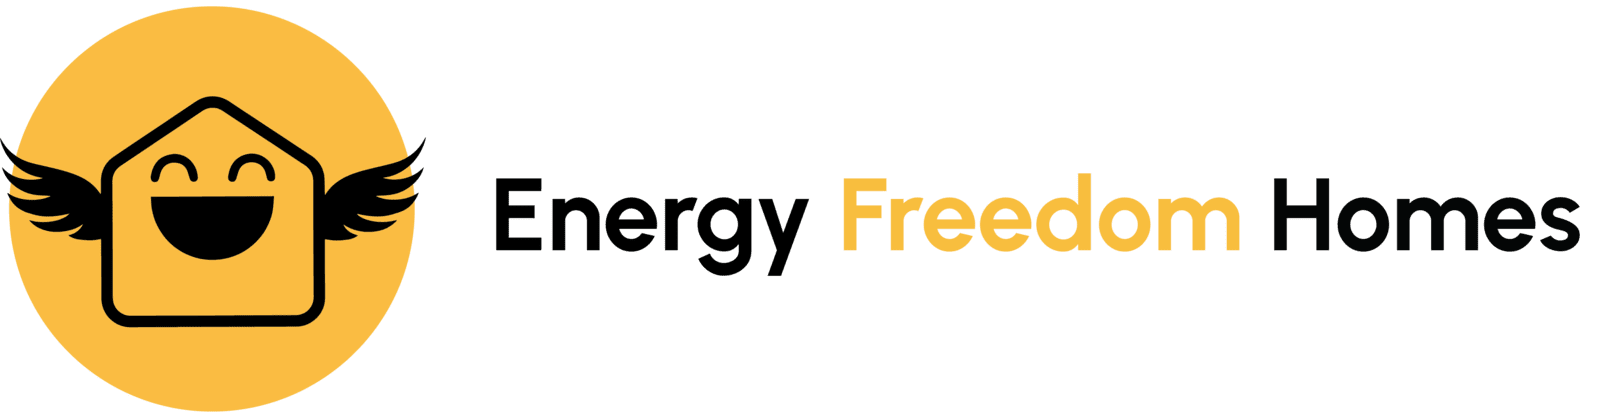 Energy Freedom Homes